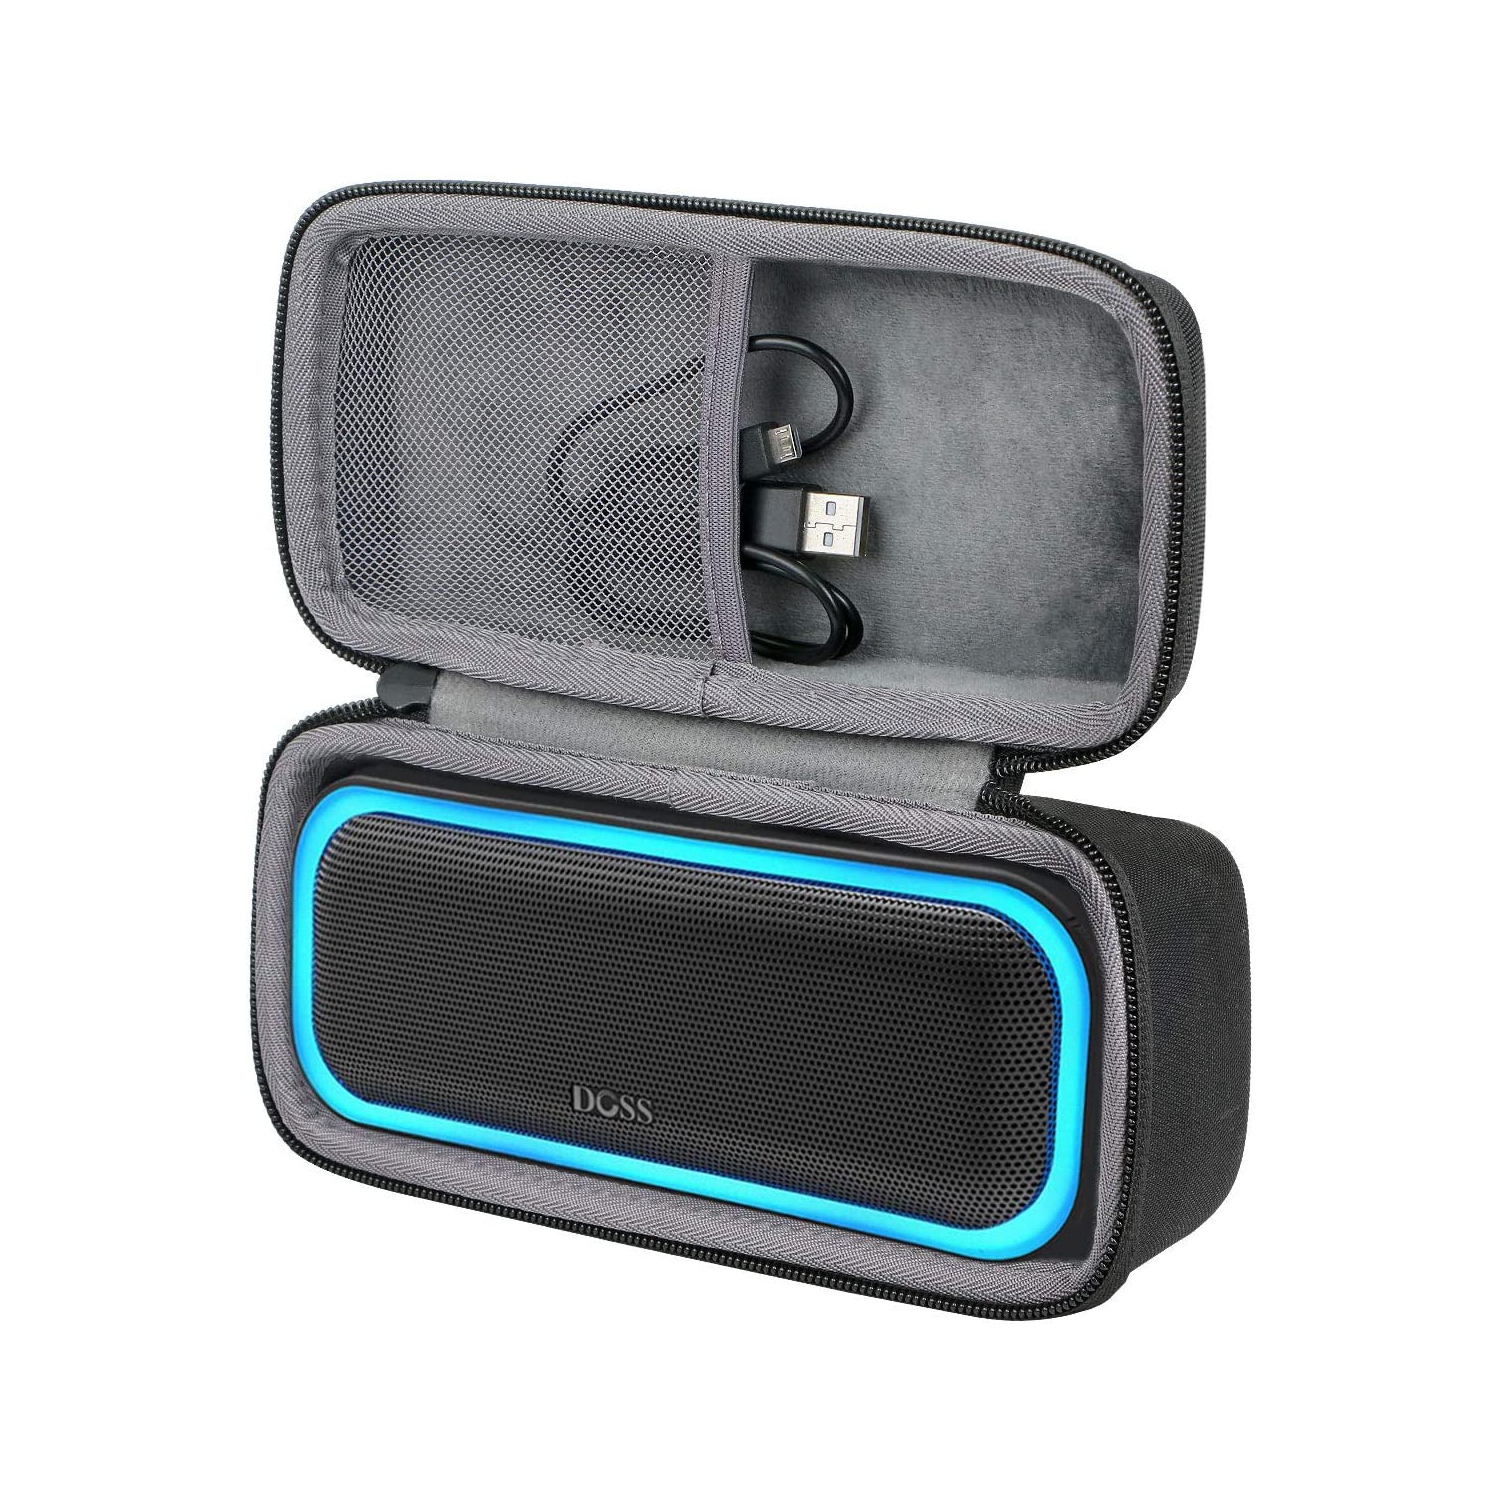 co2crea Hard Travel Case for DOSS SoundBox Pro Portable Wireless Bluetooth Speaker (Black)